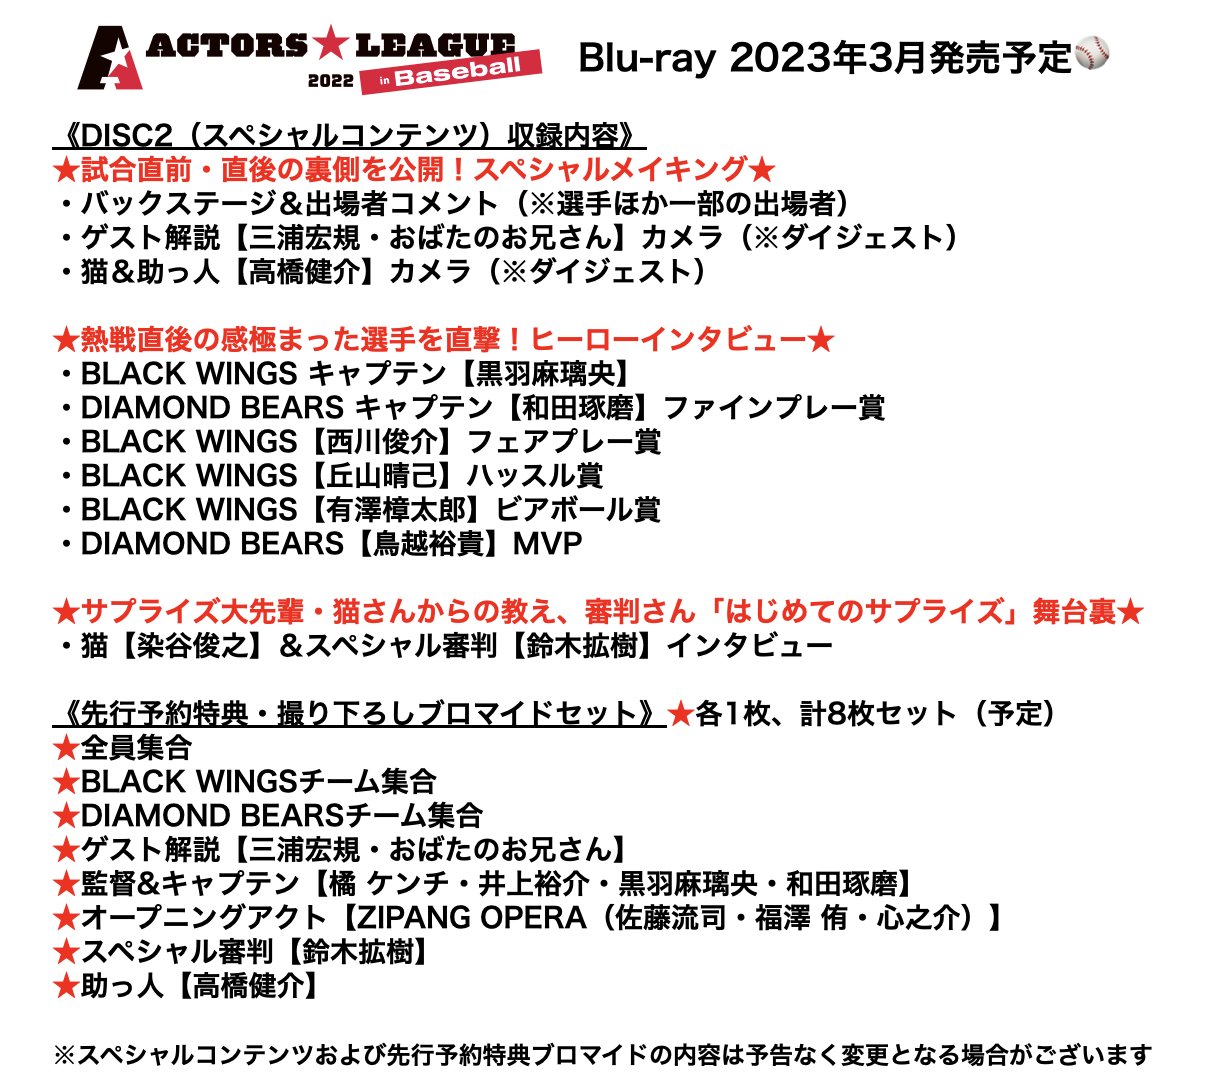 阿部顕嵐ACTORS☆LEAGUE in Baseball 2022 Blu-ray